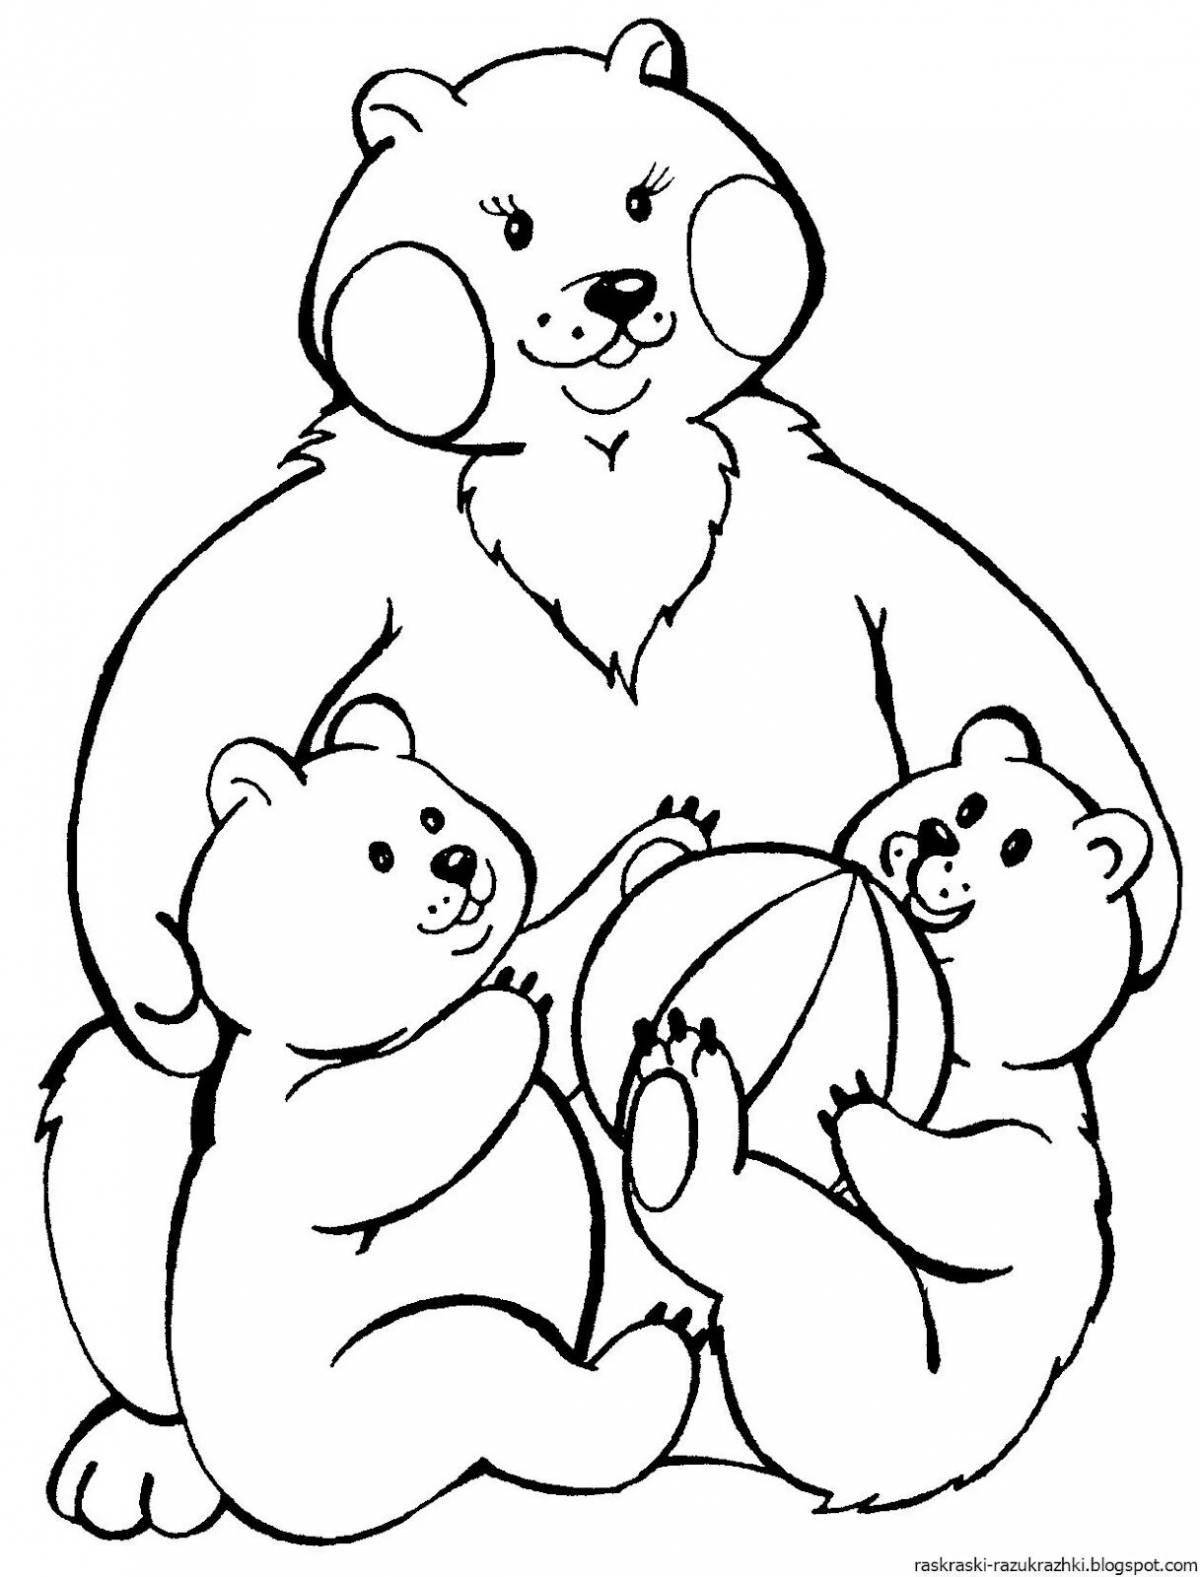 Раскраска семейка ярких медведей